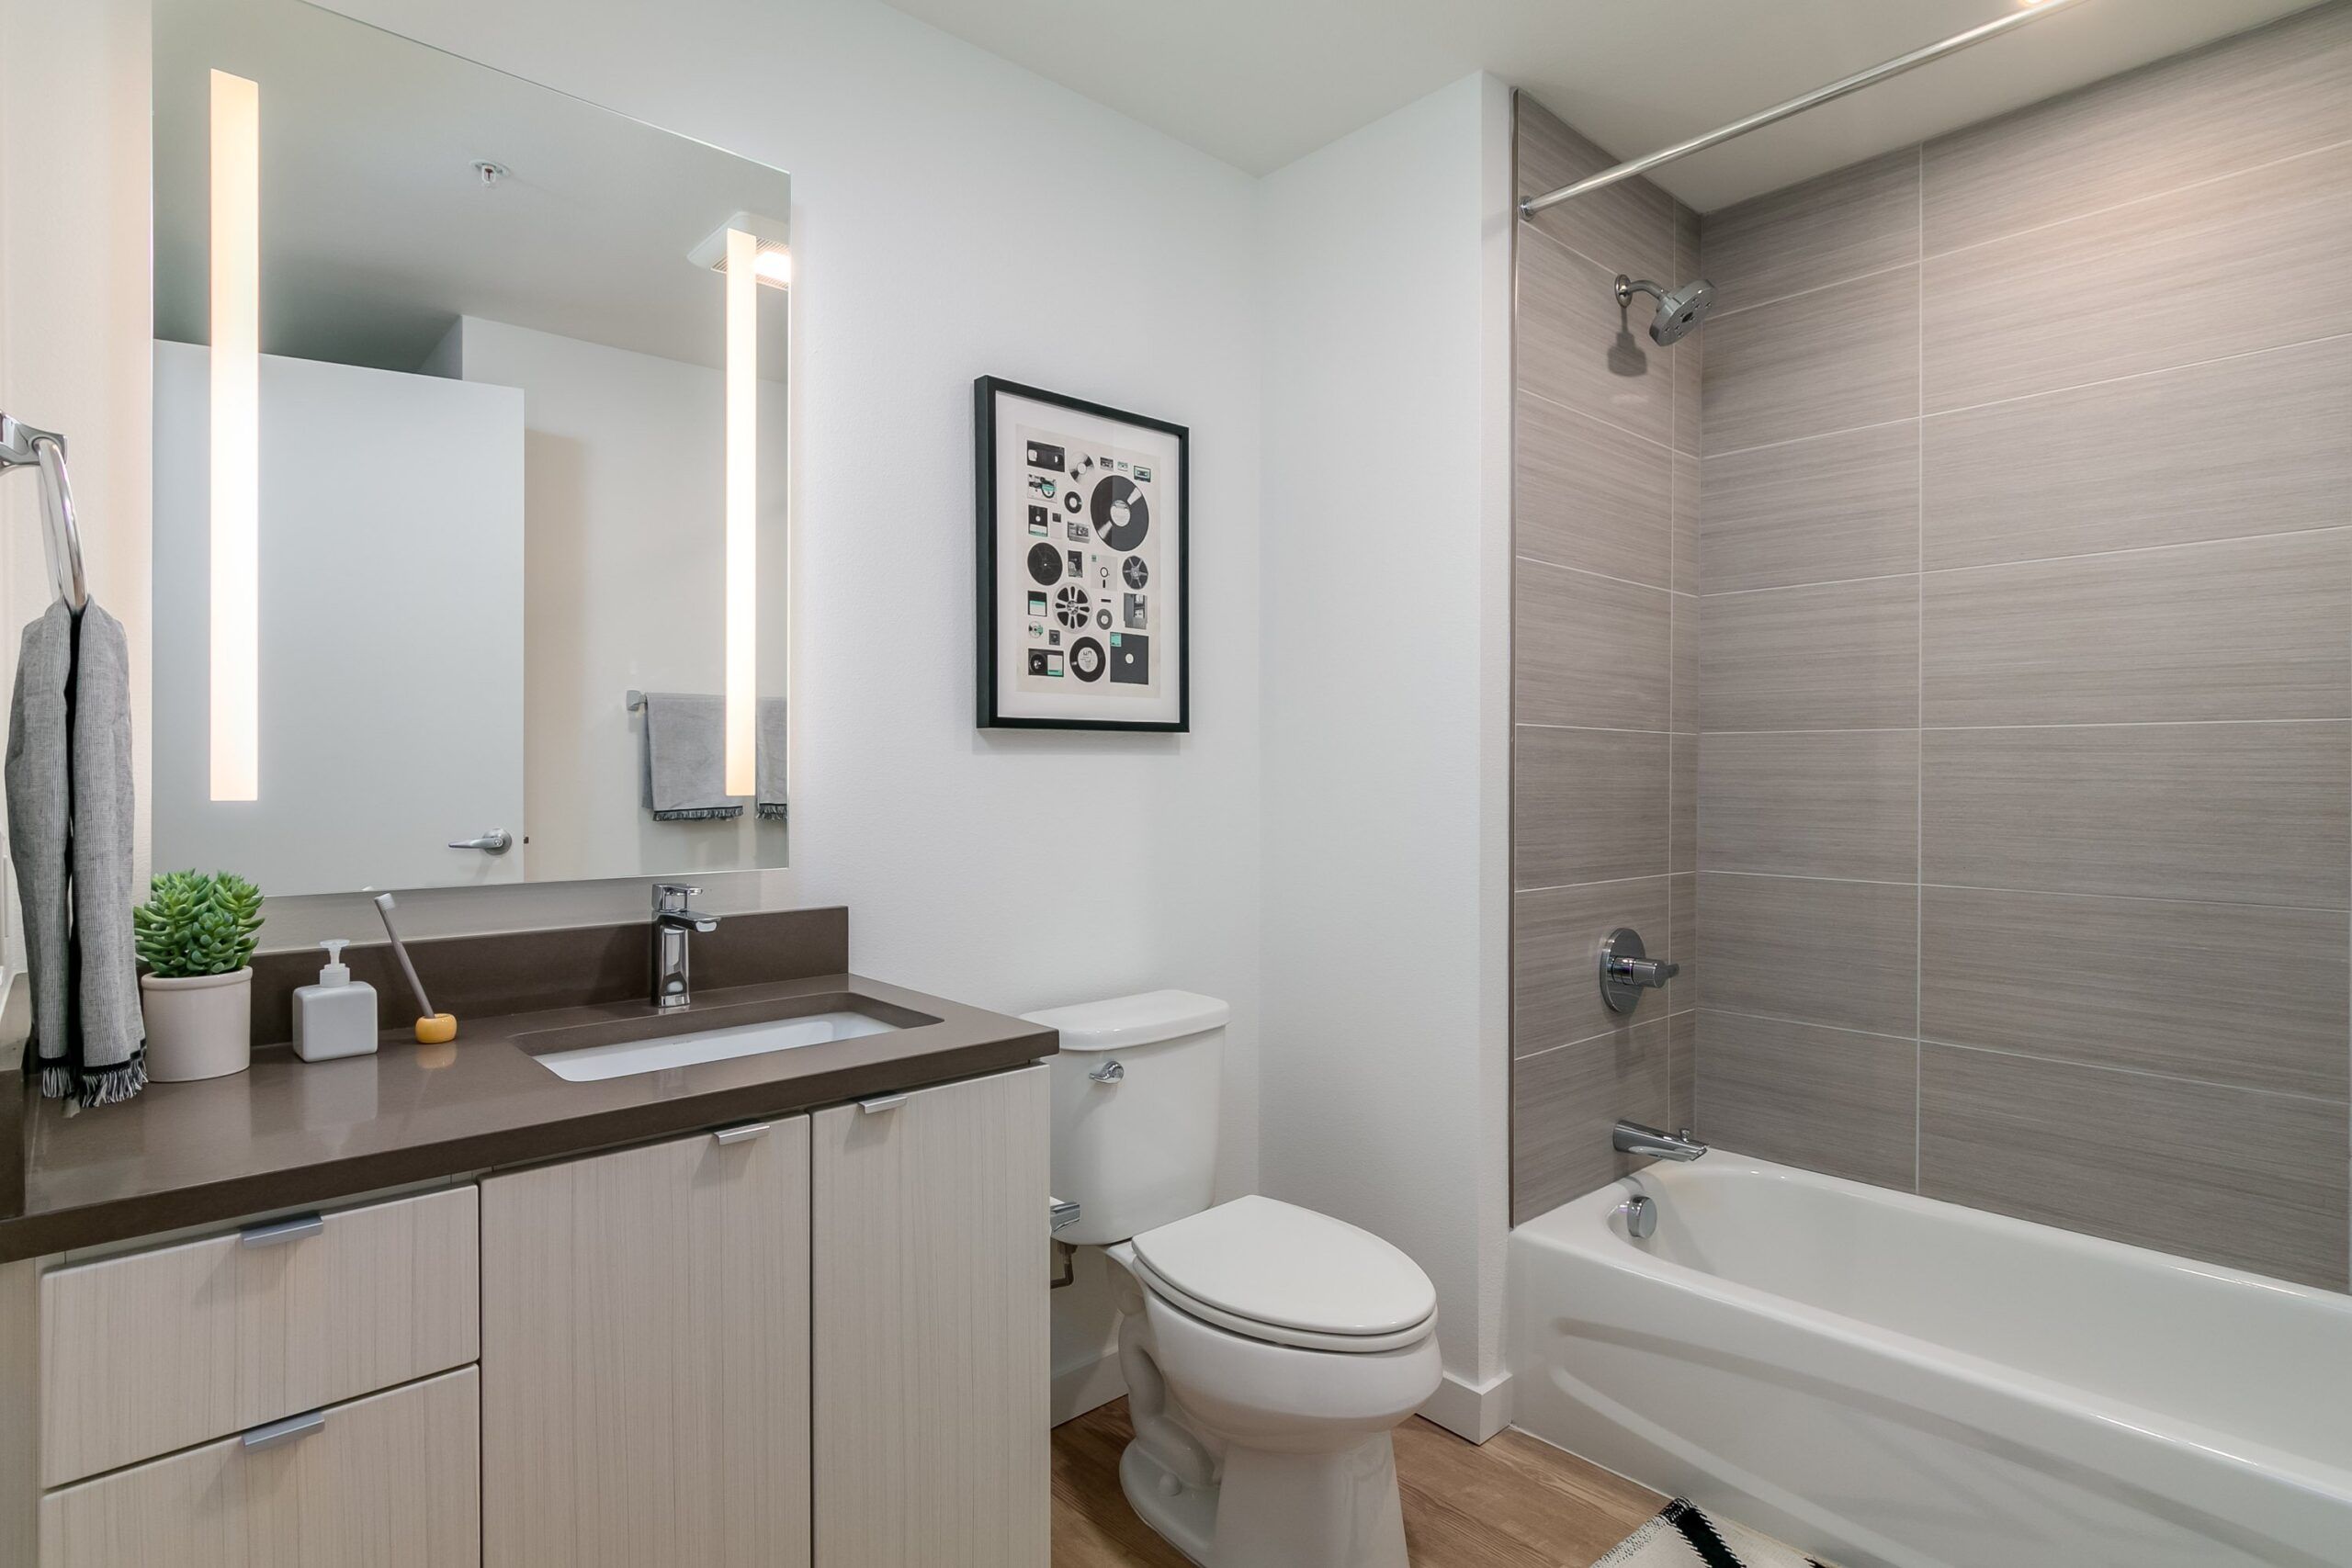 Alta Peak apartments bathroom interior with vanity and shower